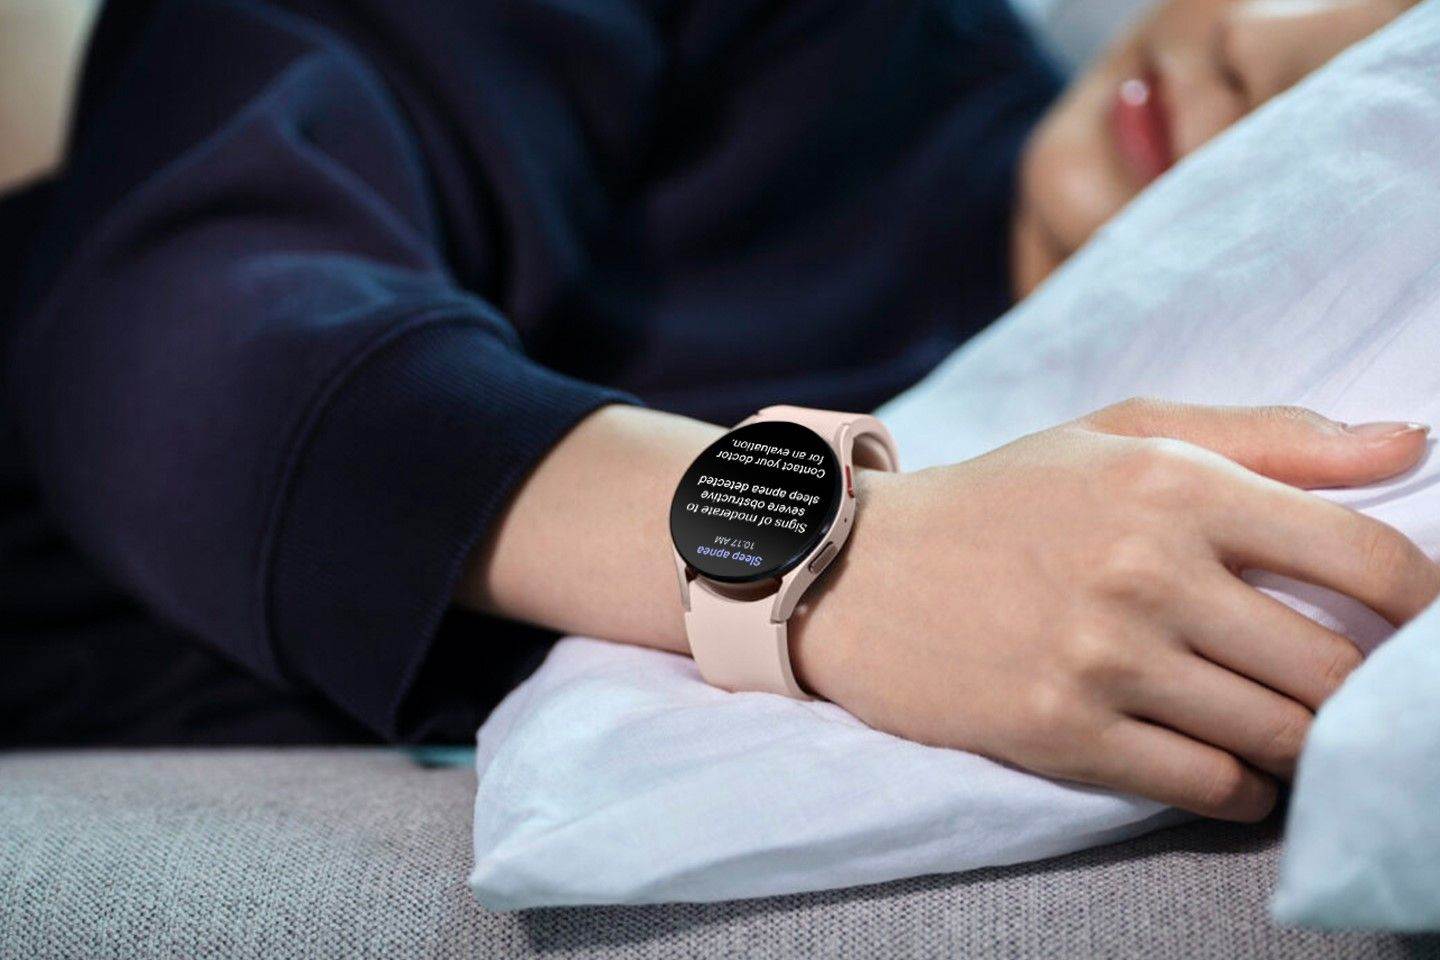  Samsung Galaxy Watch spavanje FDA-Sleep-Apnea-Feature.jpg 